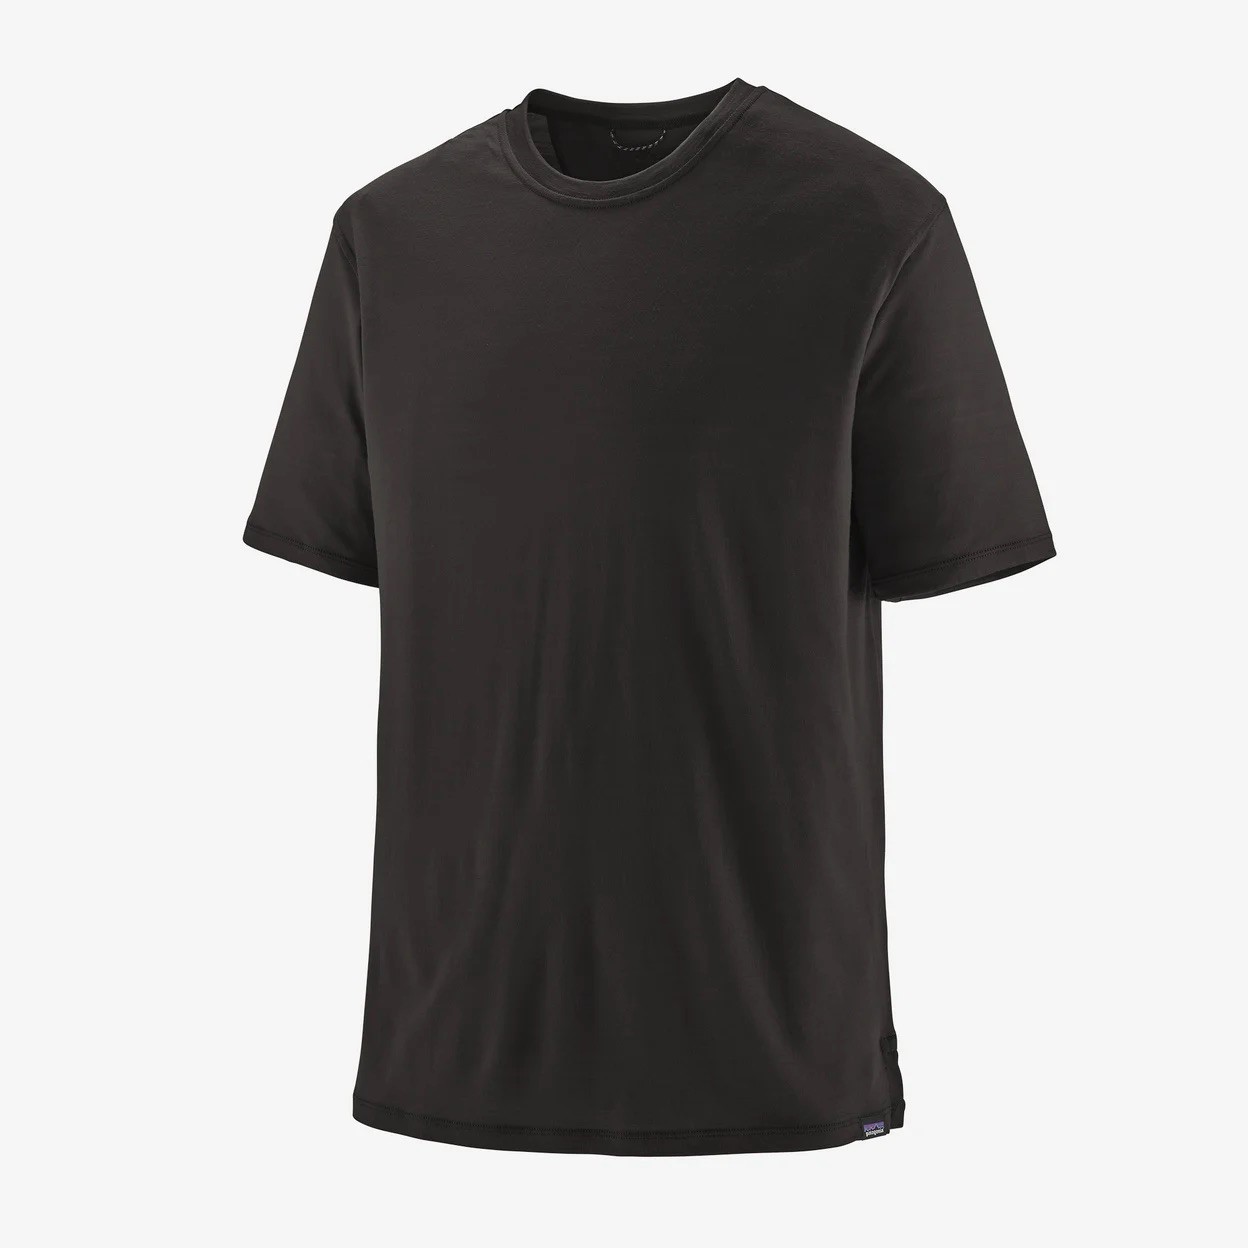 Patagonia M's Capilene Cool Merino Shirt - Black - Medium